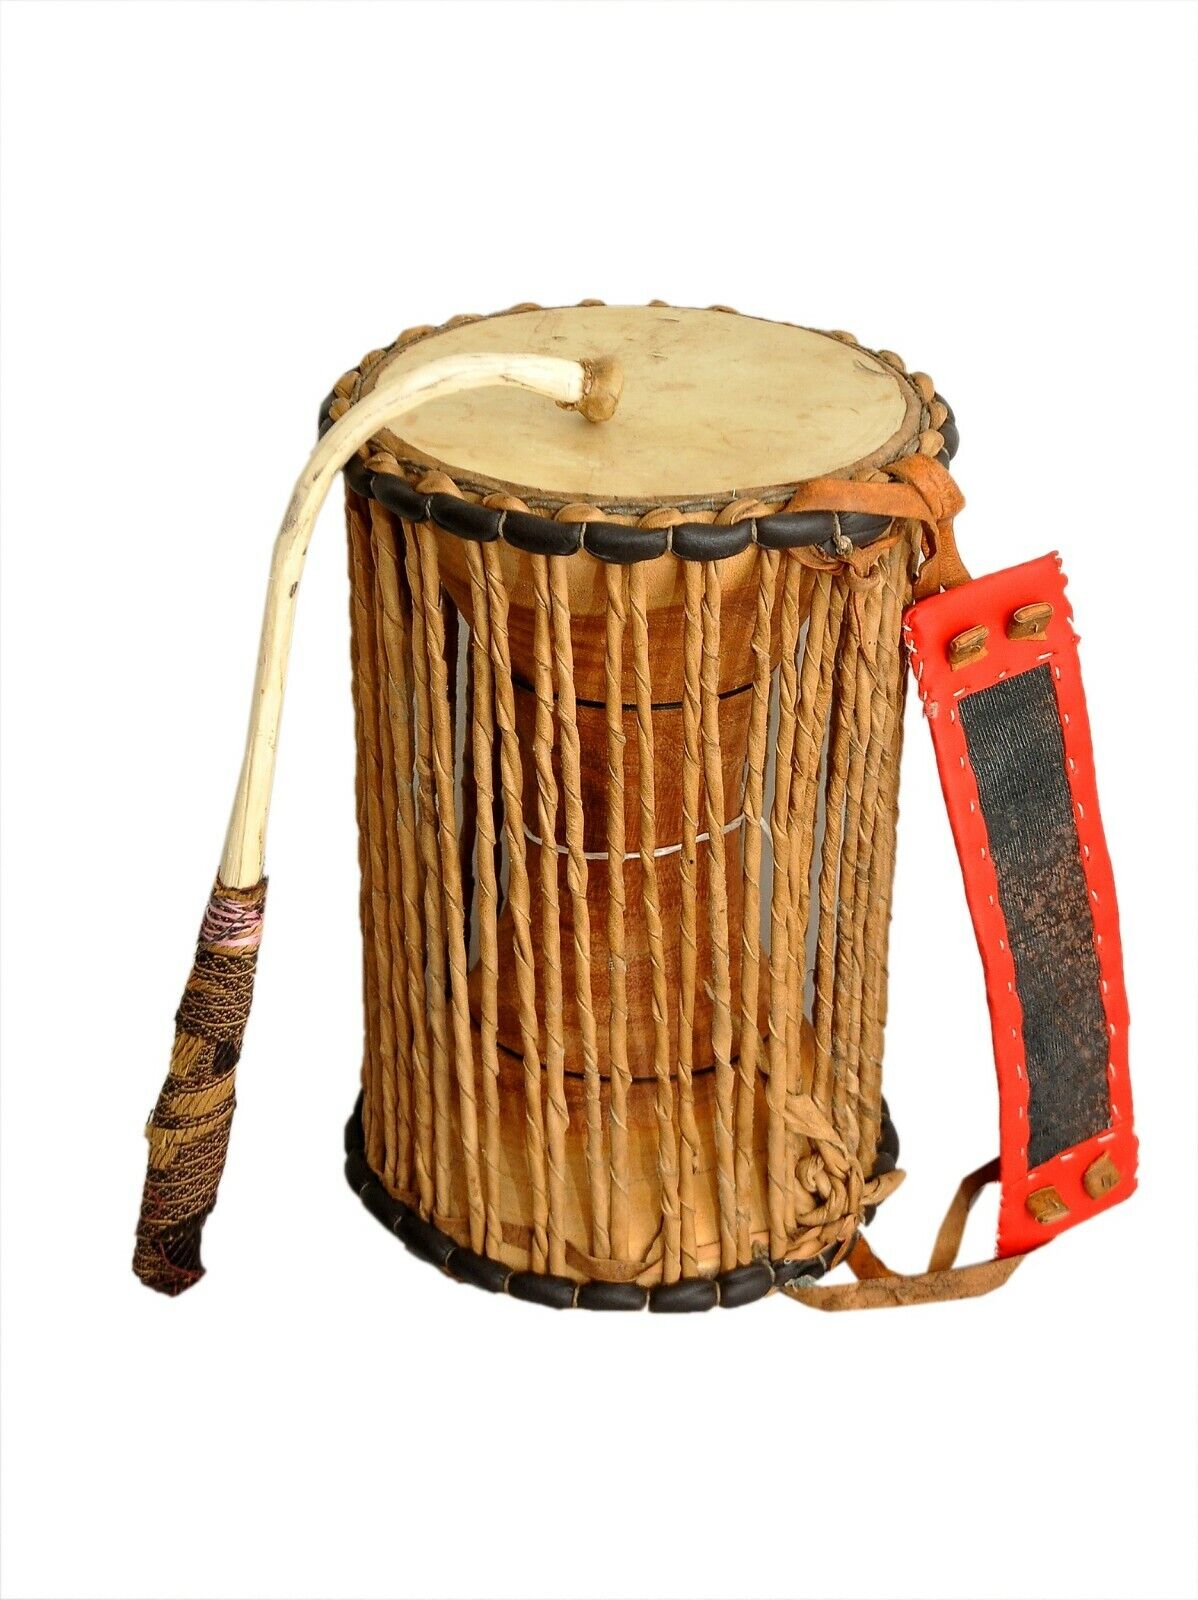 African Talking Drum with Stick Beater - Gangan Drum